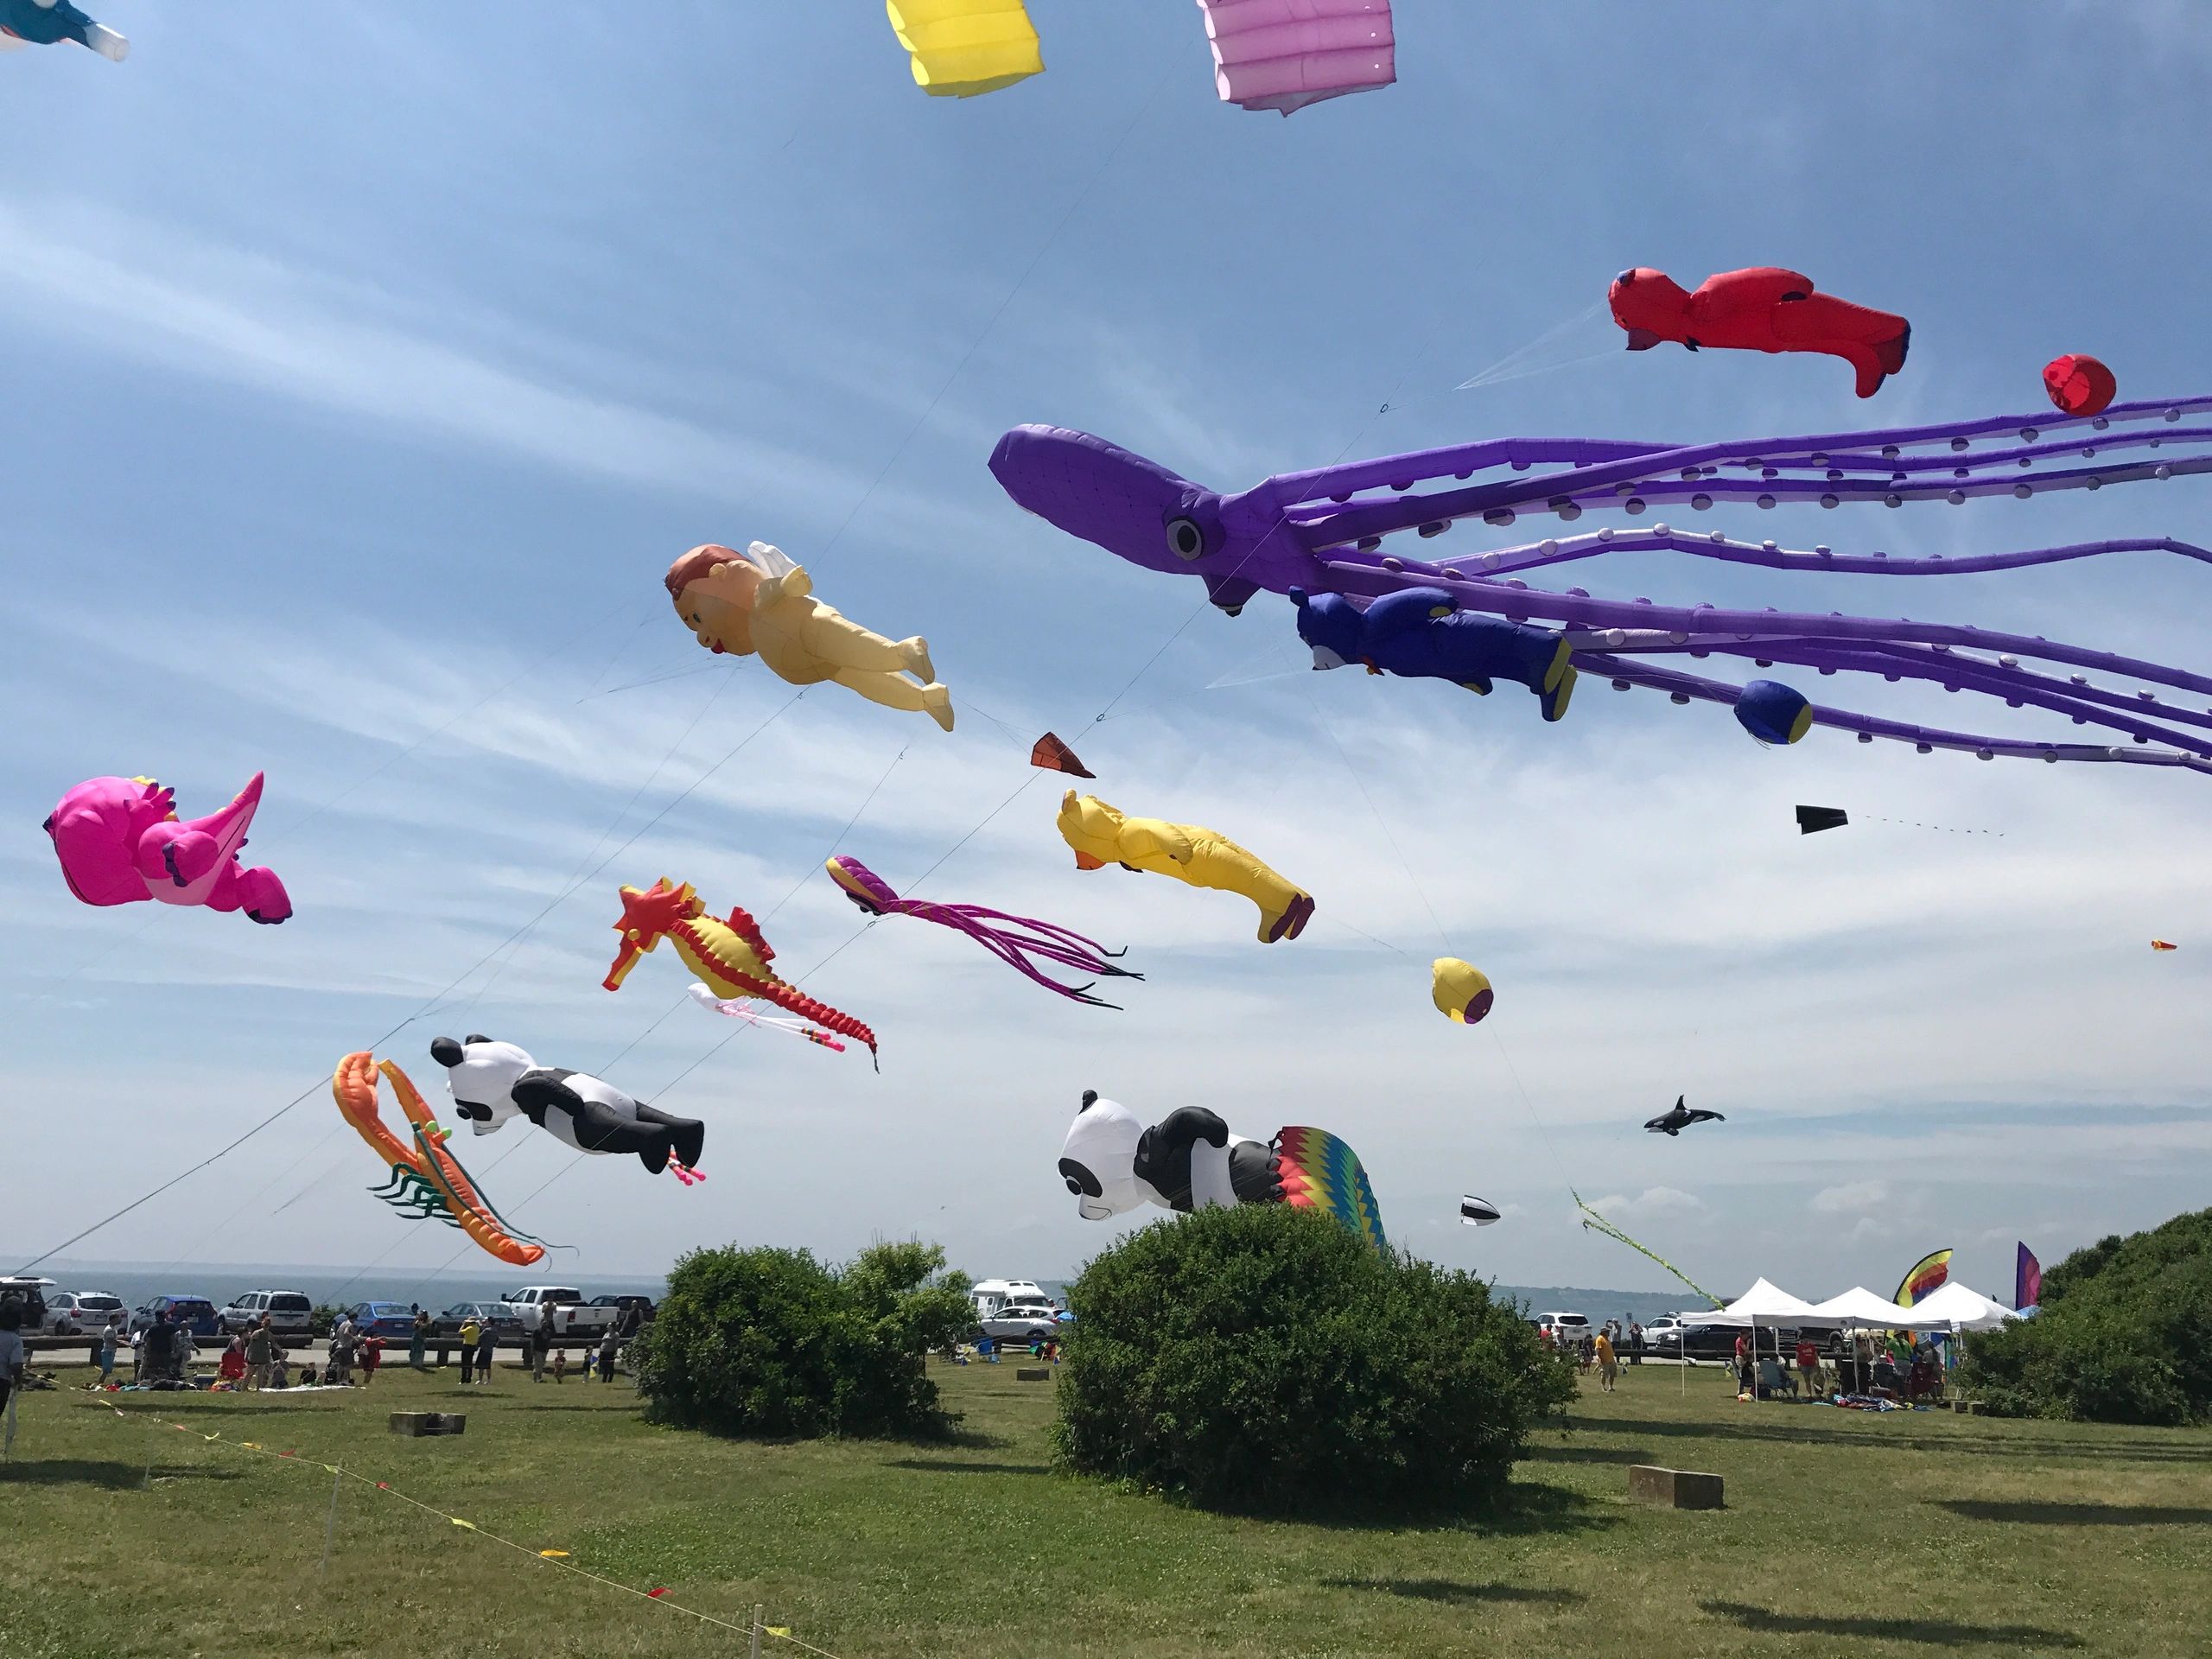 The Newport Kite Festival